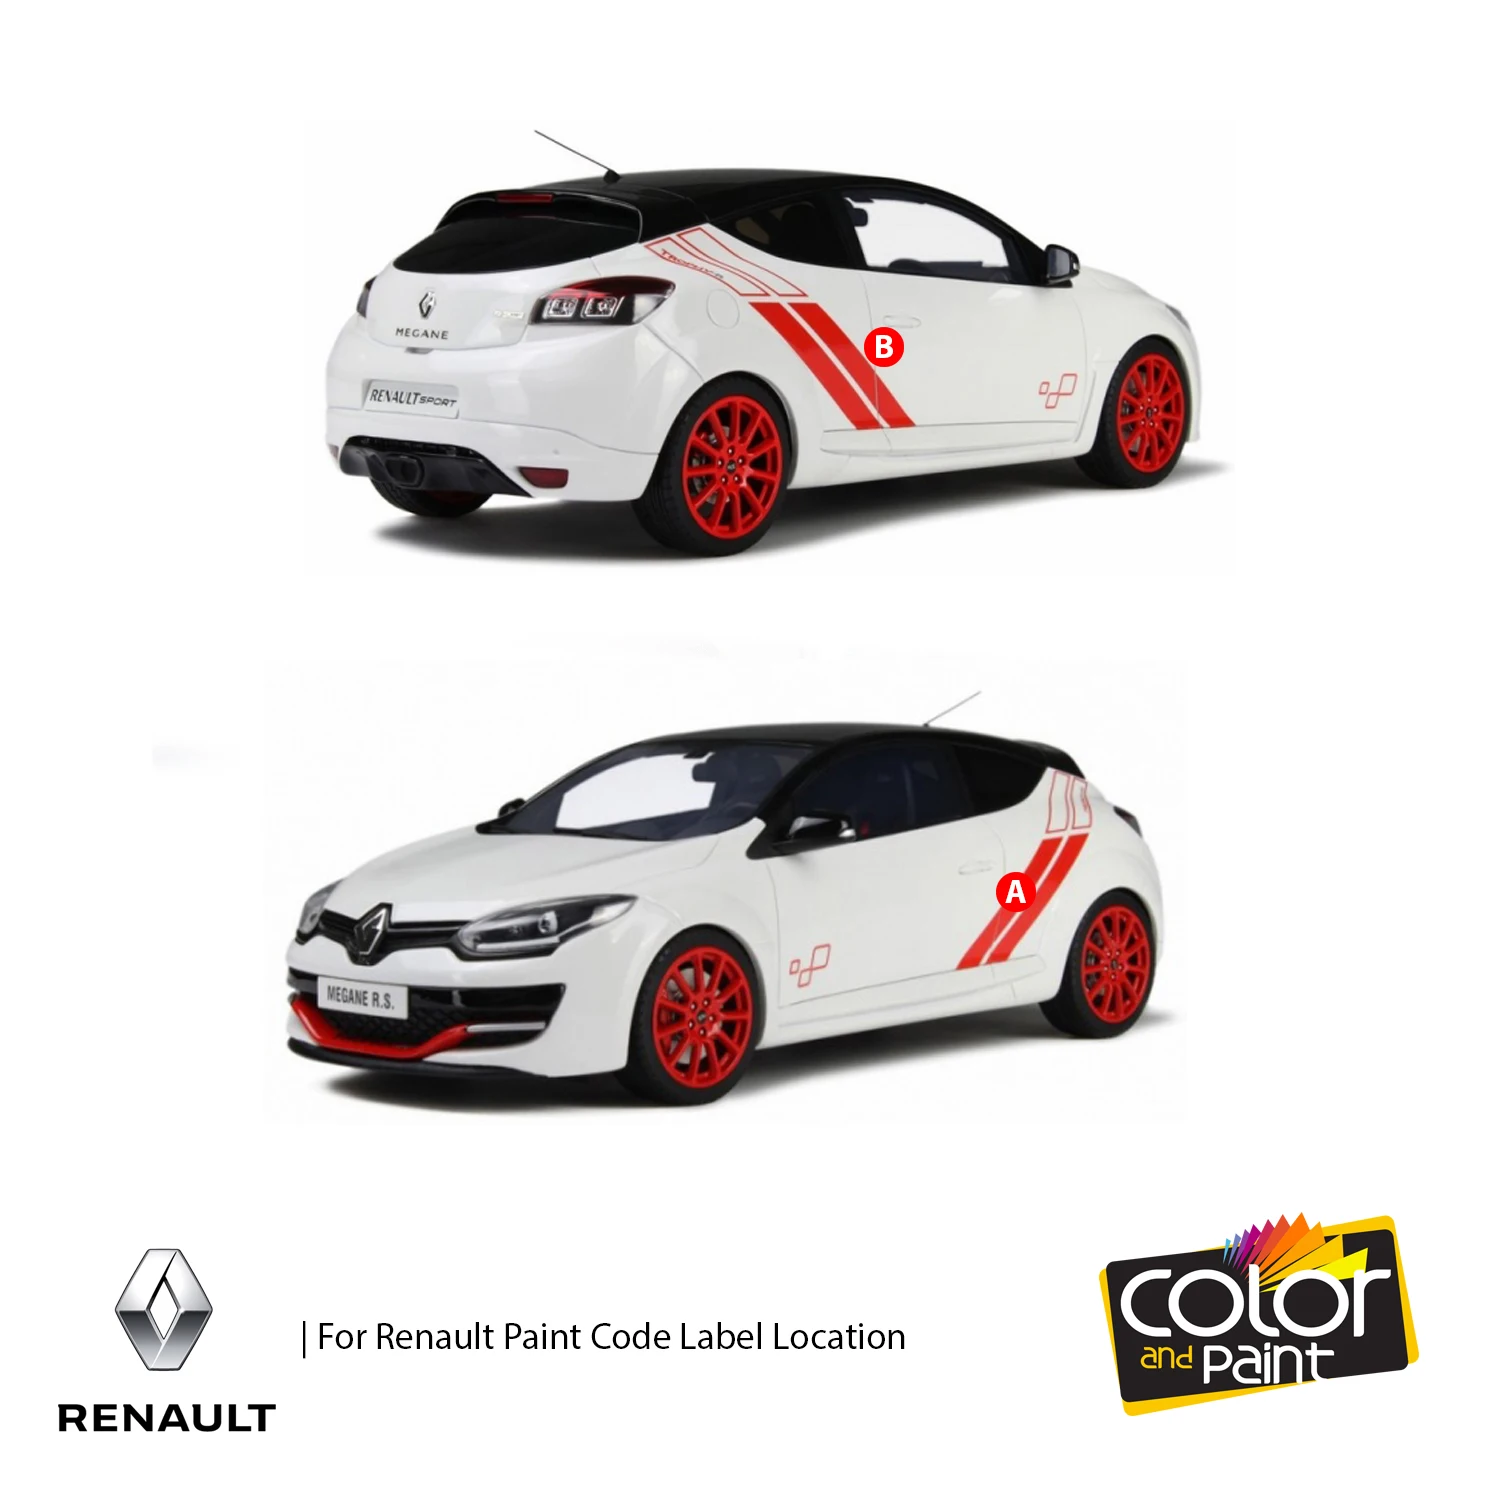 

Color and Paint for Renault Automotive Touch Up Paint - ABSINTHE CAMAIEU MET MAT - 225.66 - Paint Scratch Repair, exact Match